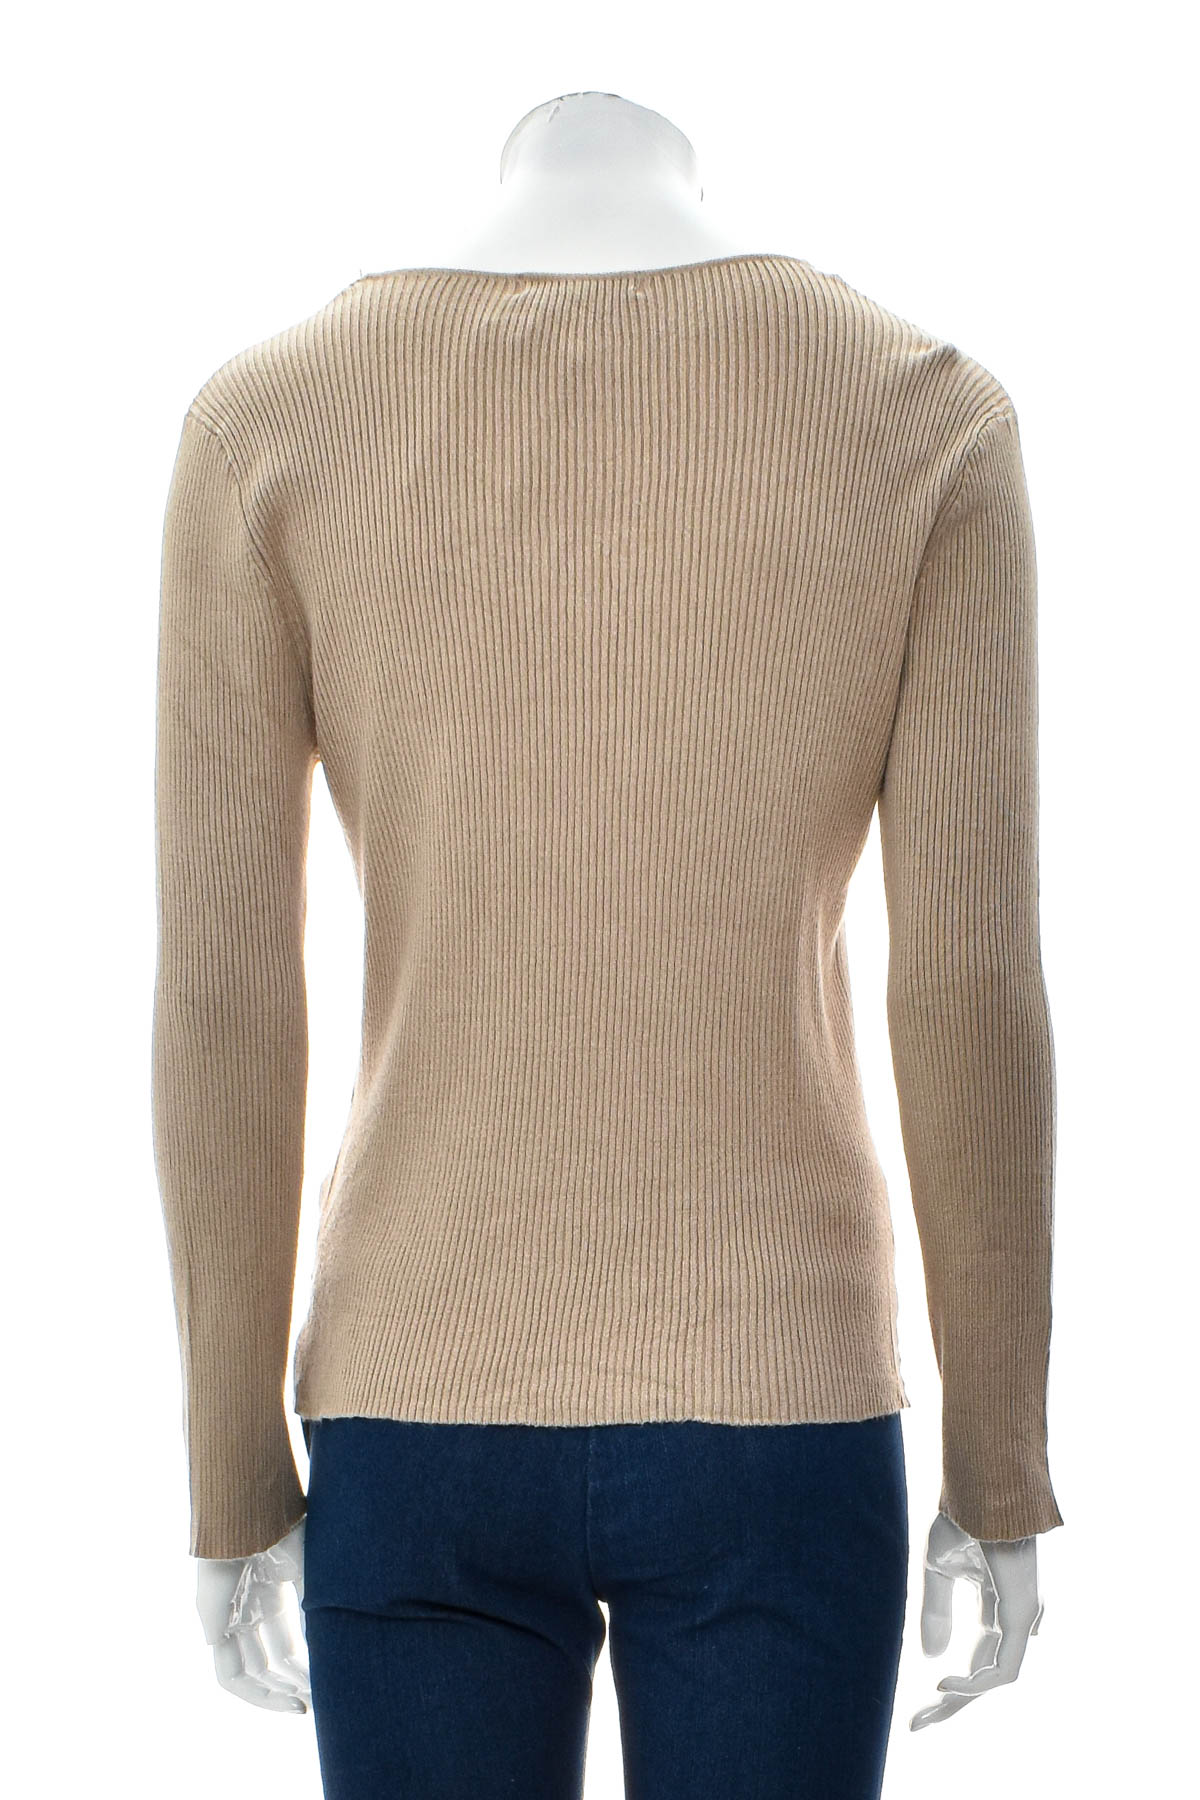 Women's sweater - ACTIVE USA - 1